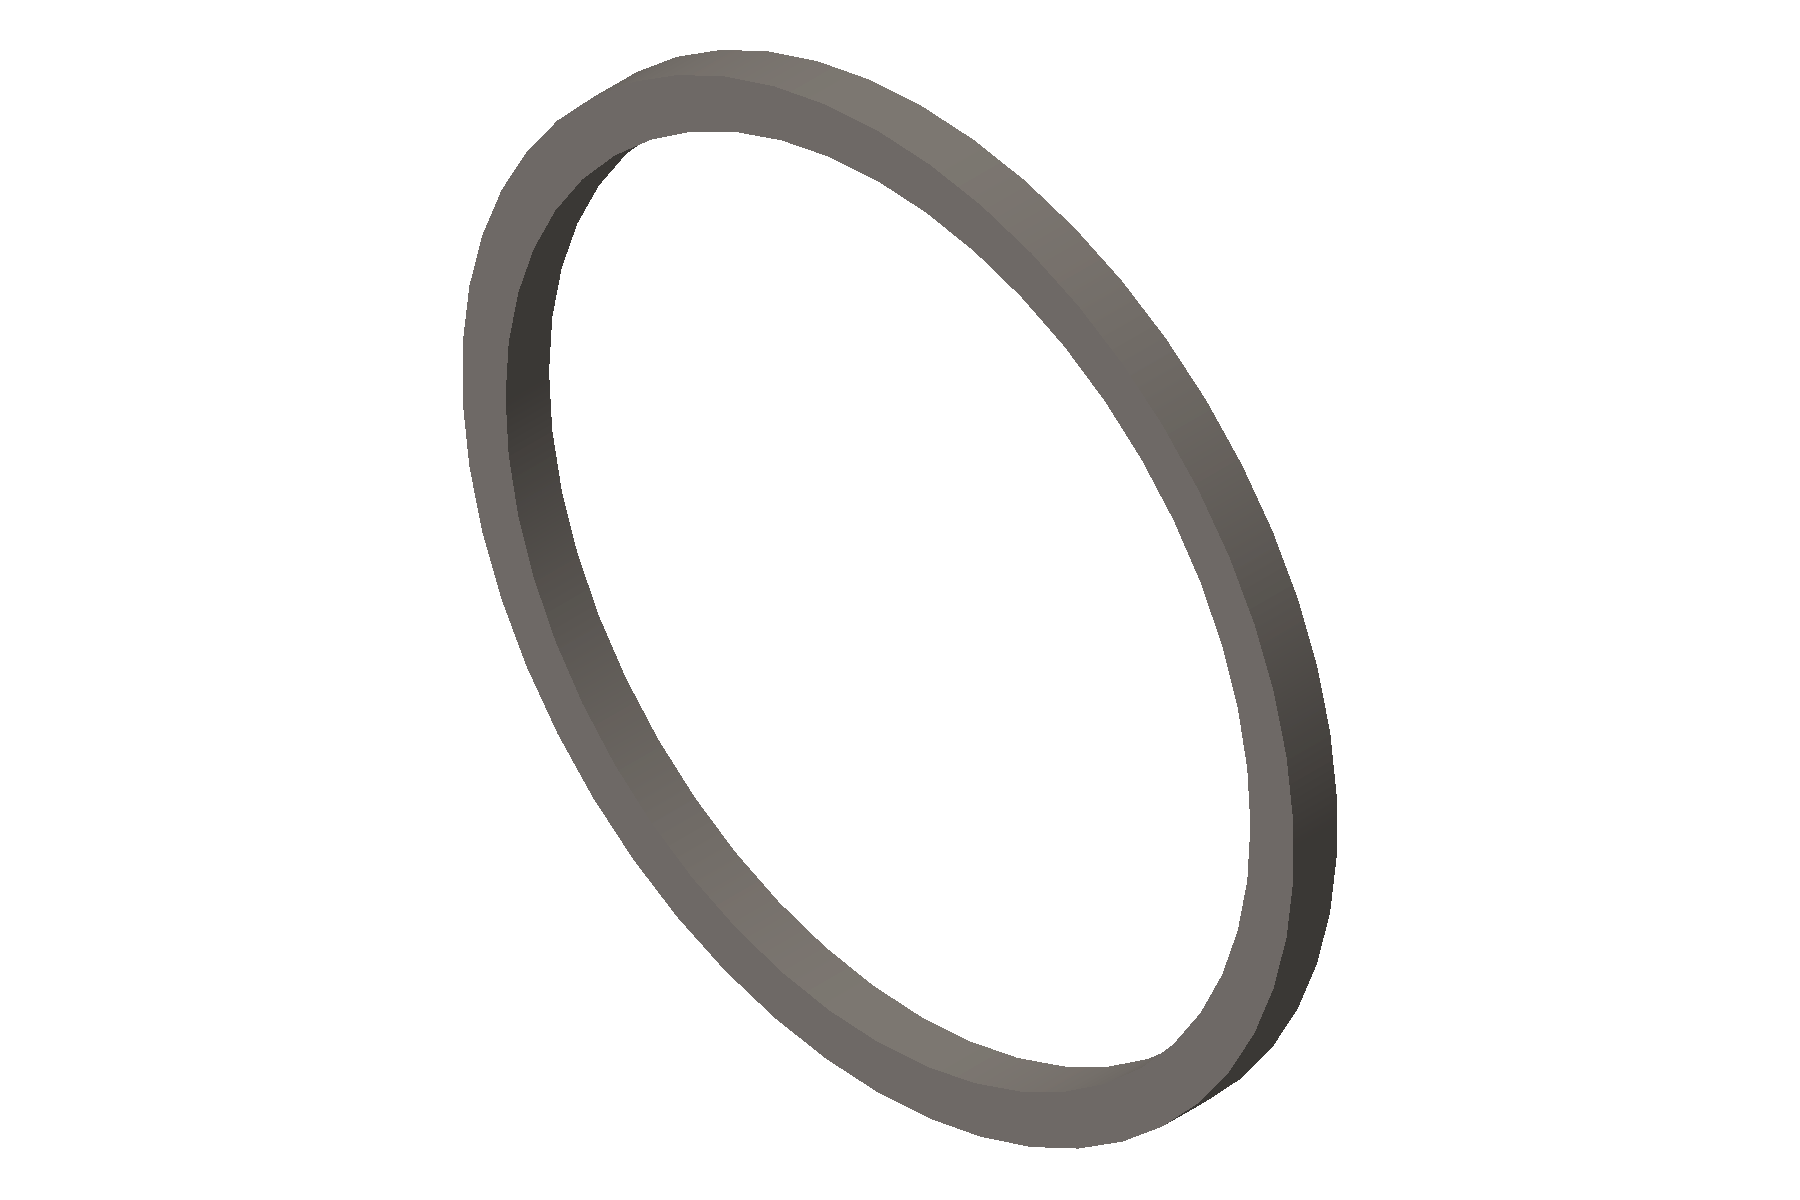 (NEW OLD STOCK) 3906698 - Cummins Rectangular Ring Seal